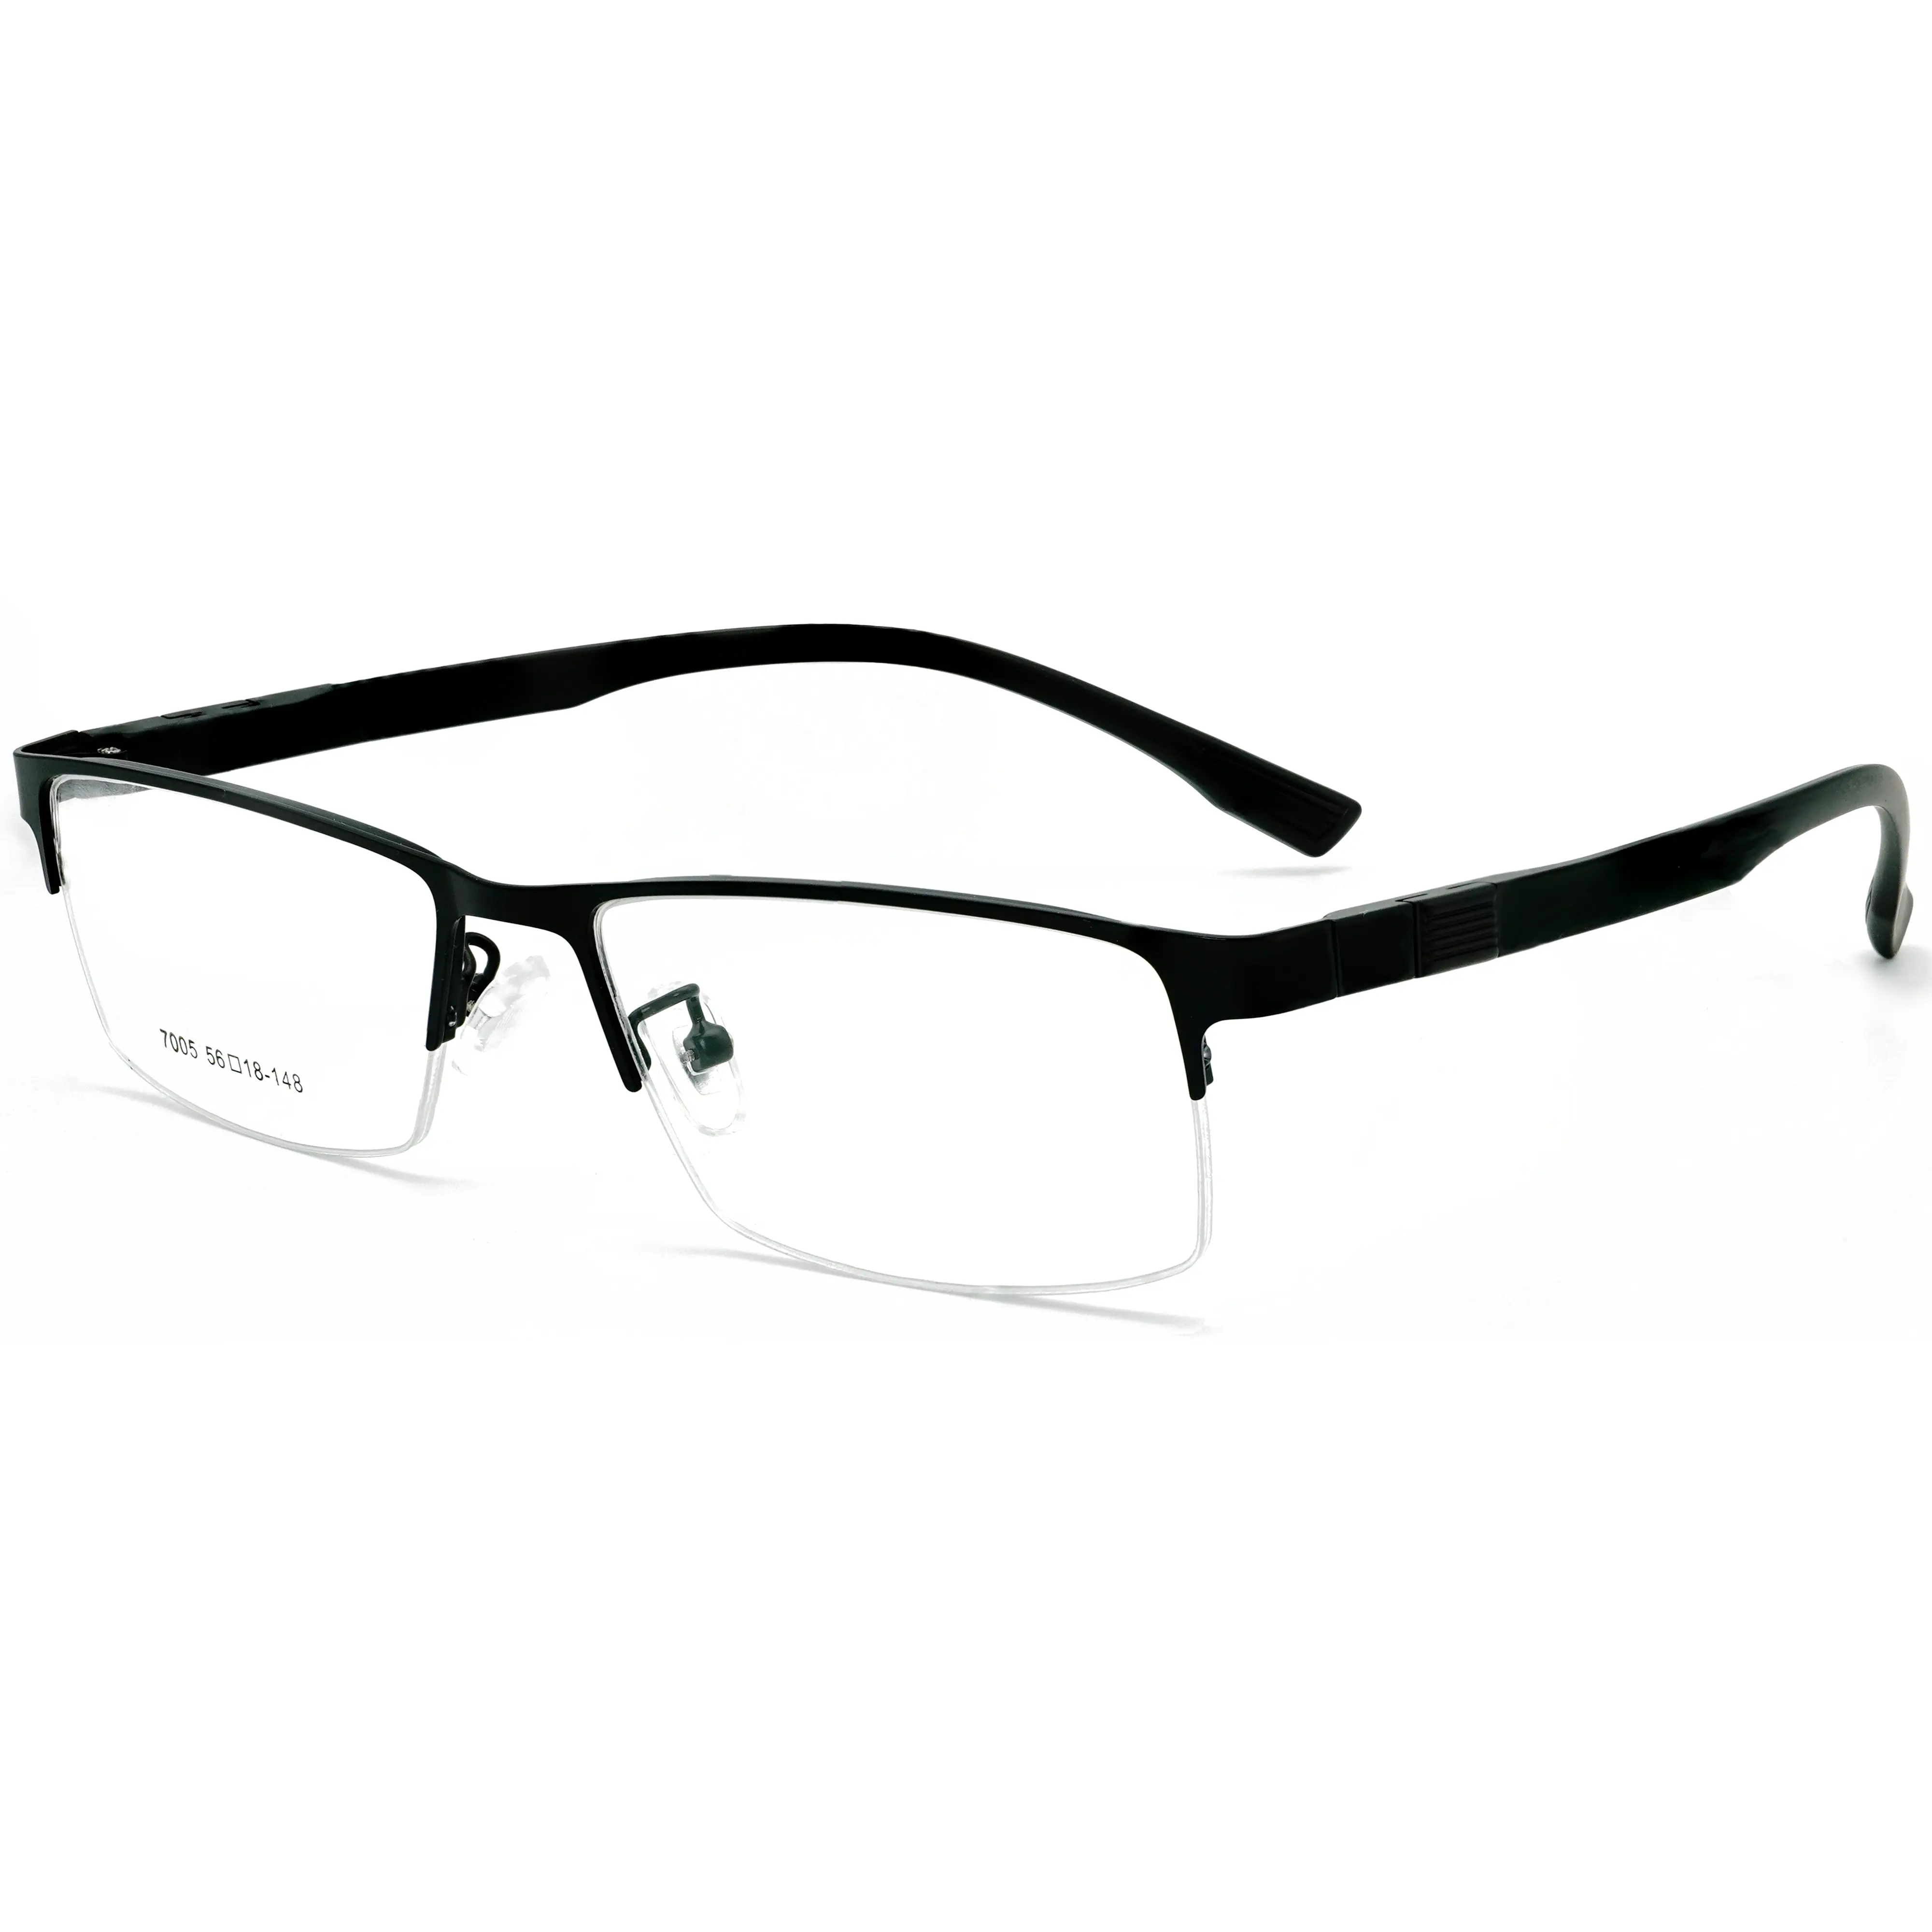 New Fashion Glasses Optical Eyeglasses Frame Business Men Glasses Half Rim Computer Cellphone Eyewear